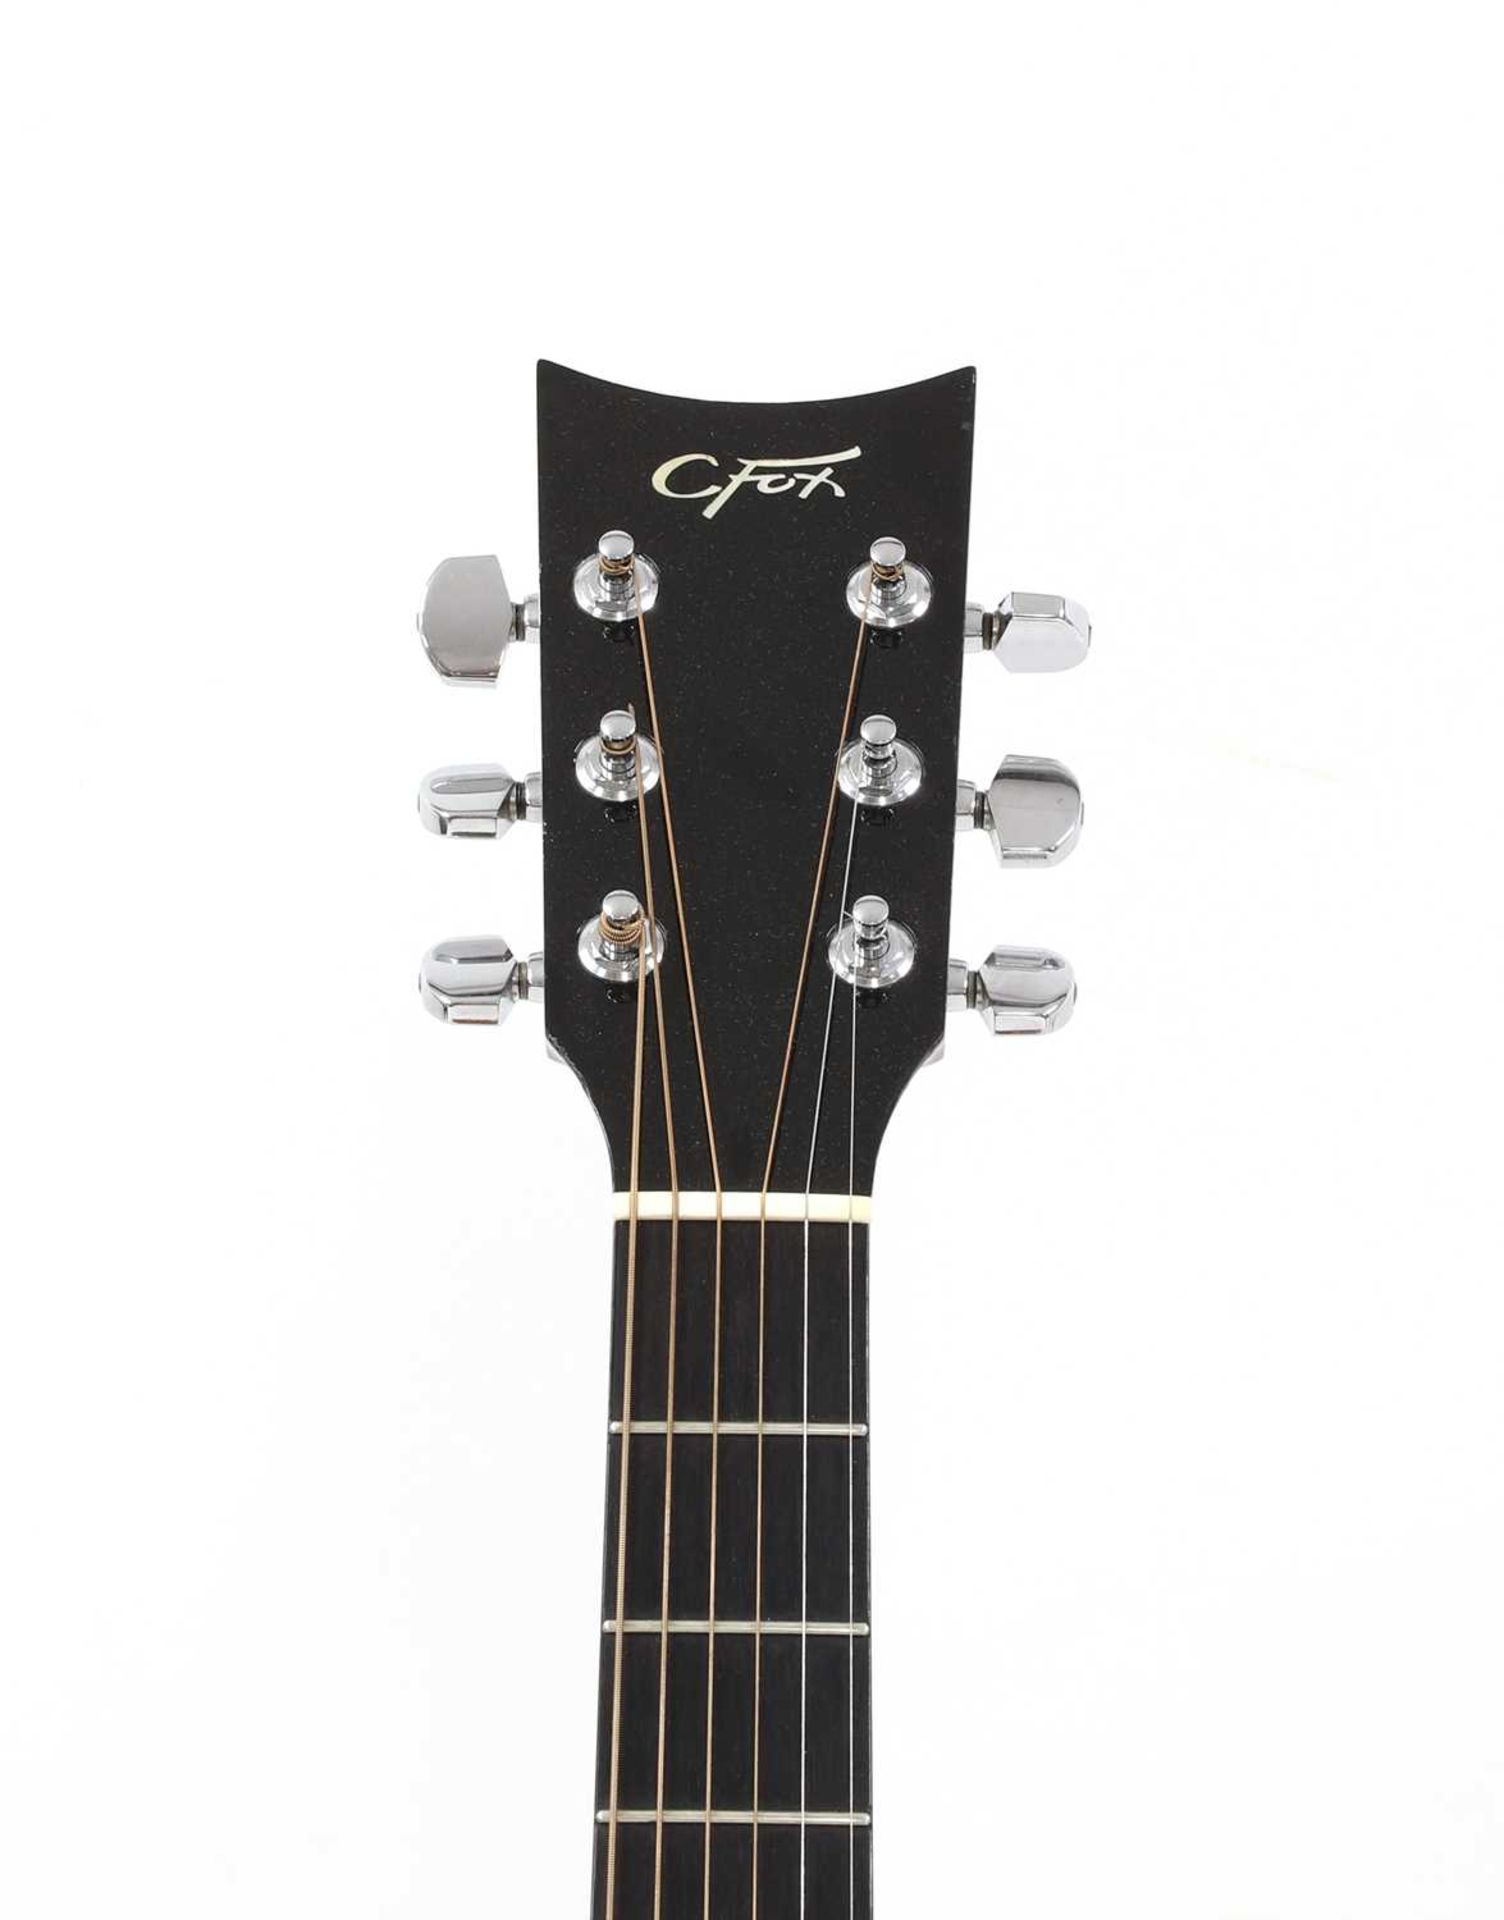 A Charles Fox C Fox S J Napa acoustic guitar, - Image 4 of 9